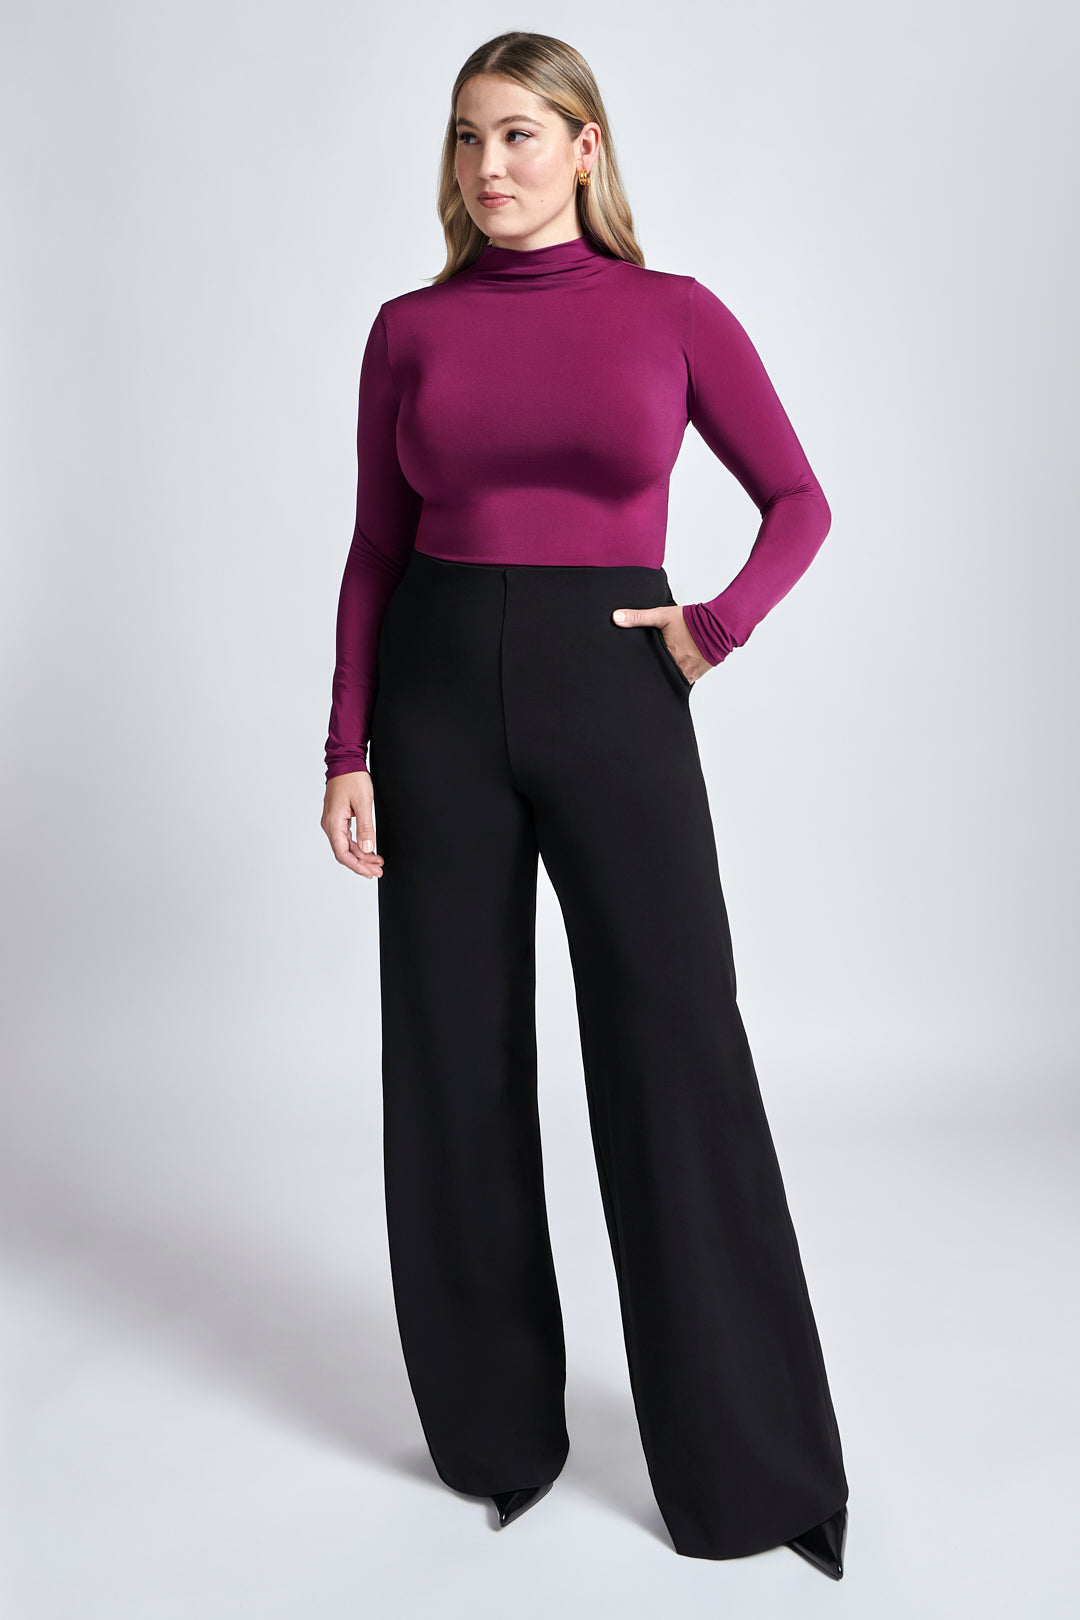 Rebecca-pullover-violet-adelaide-trouser.